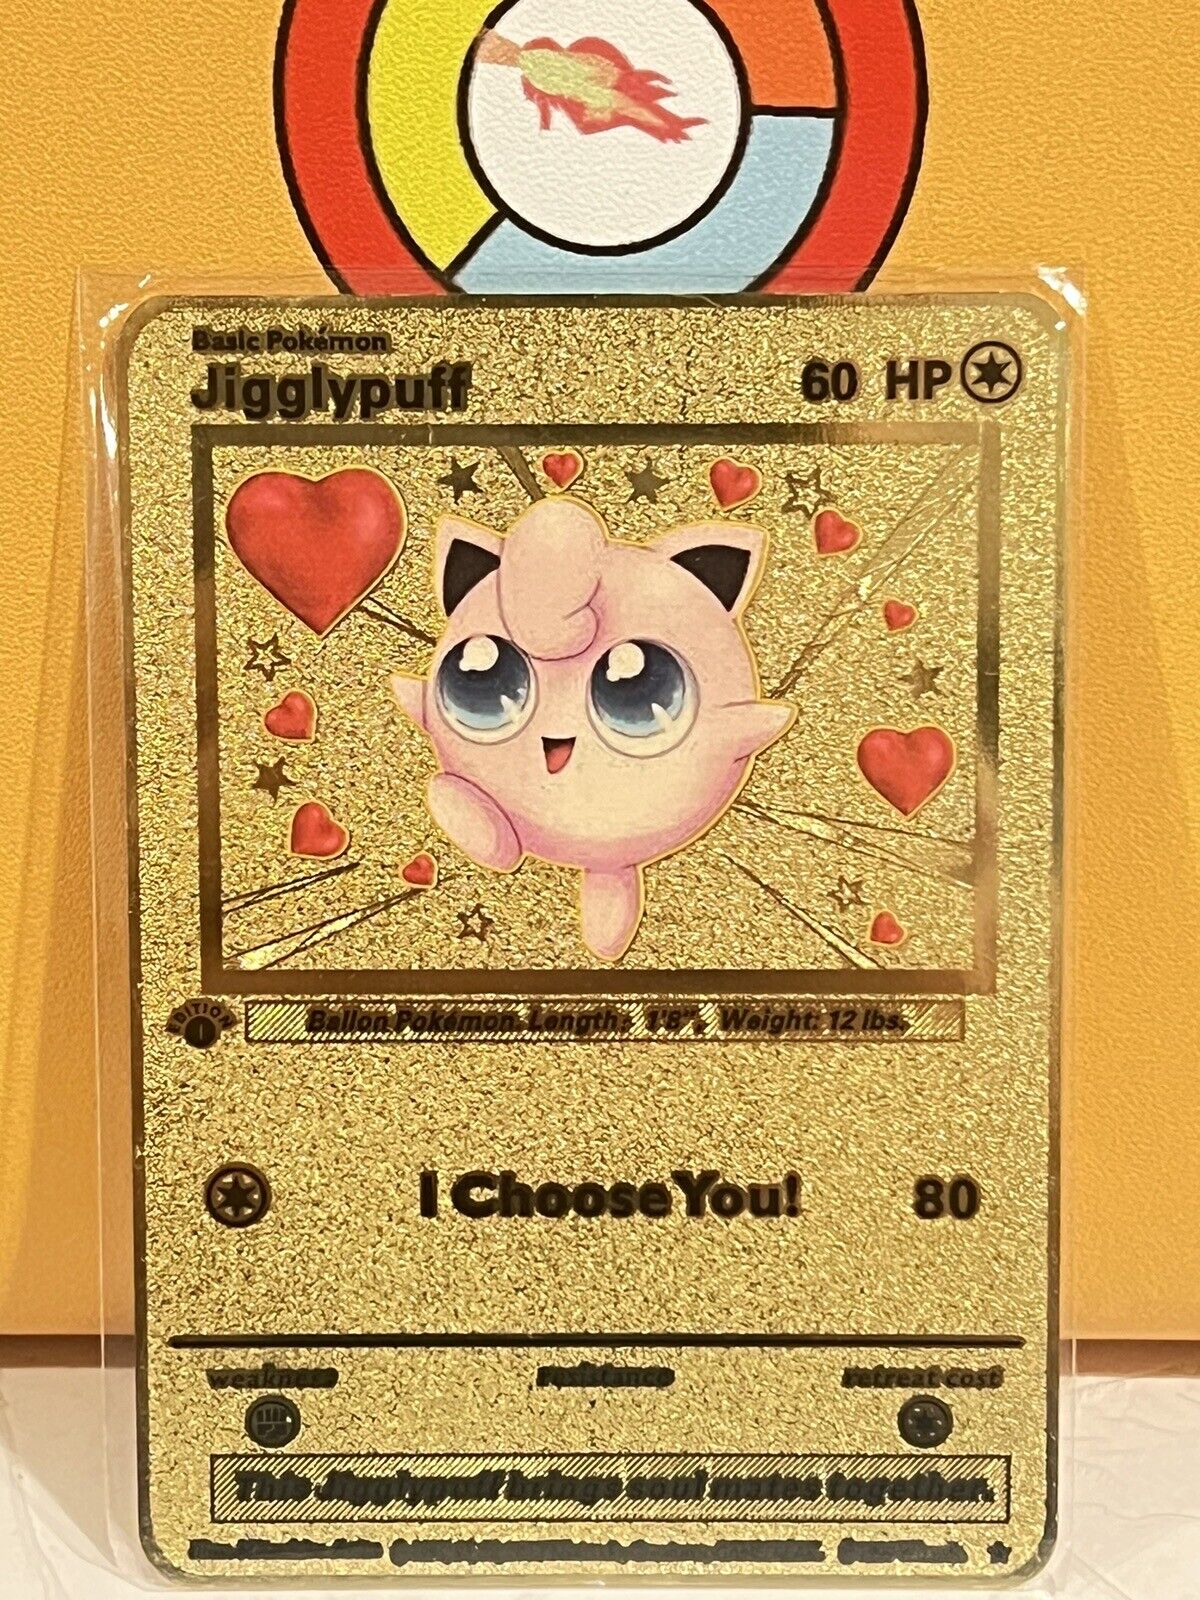 Jigglypuff I choose You Love Gold Metal Pokémon Card- Collectible/Gift/Display